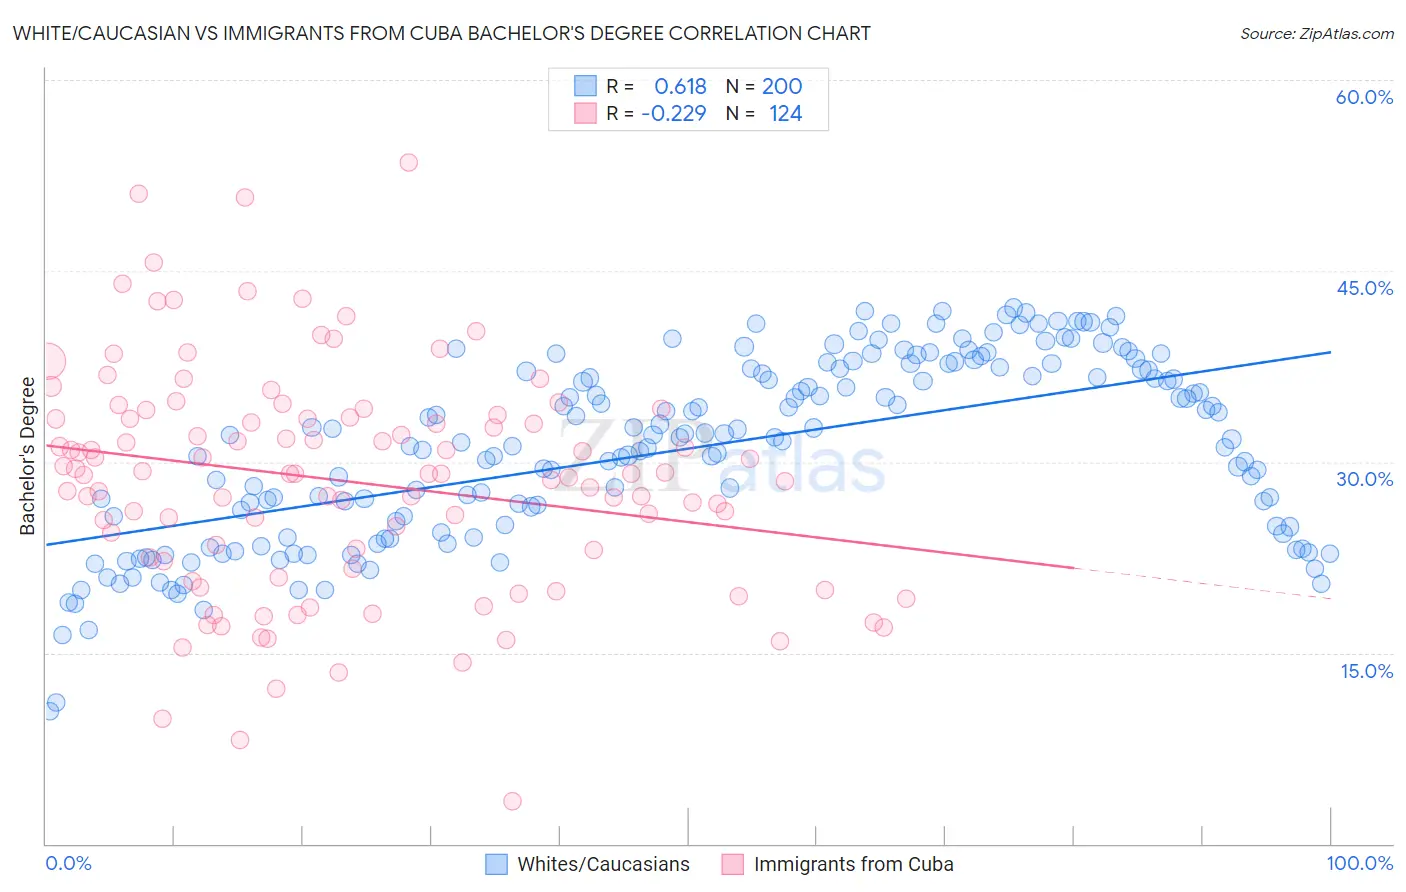 White/Caucasian vs Immigrants from Cuba Bachelor's Degree